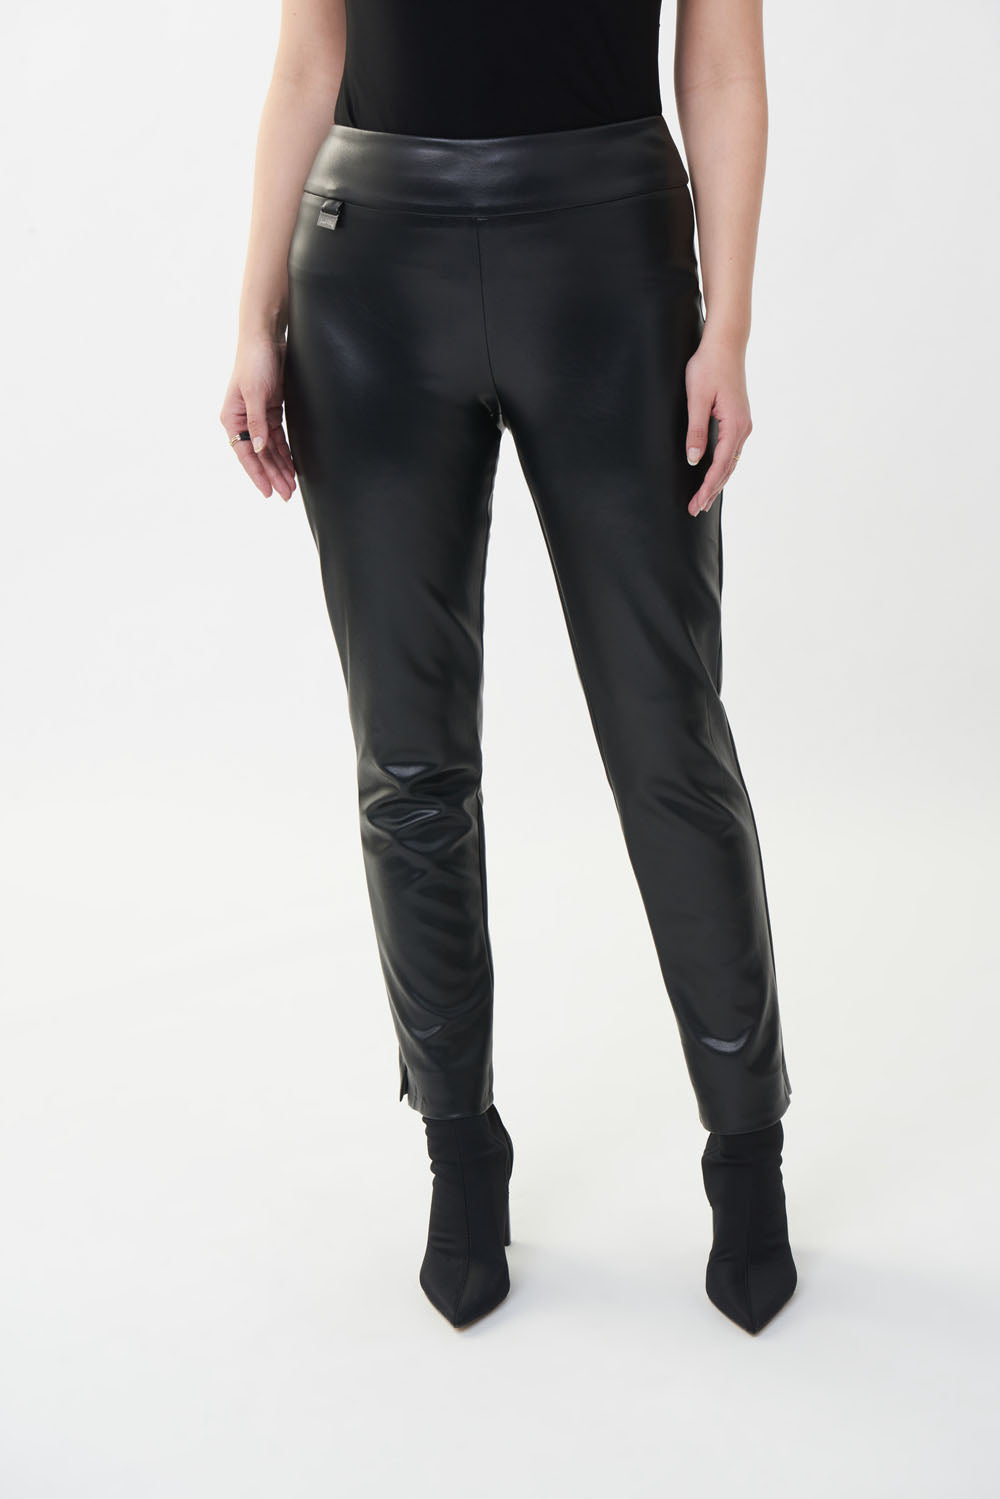 Joseph Ribkoff Faux Leather Pants Style 223131